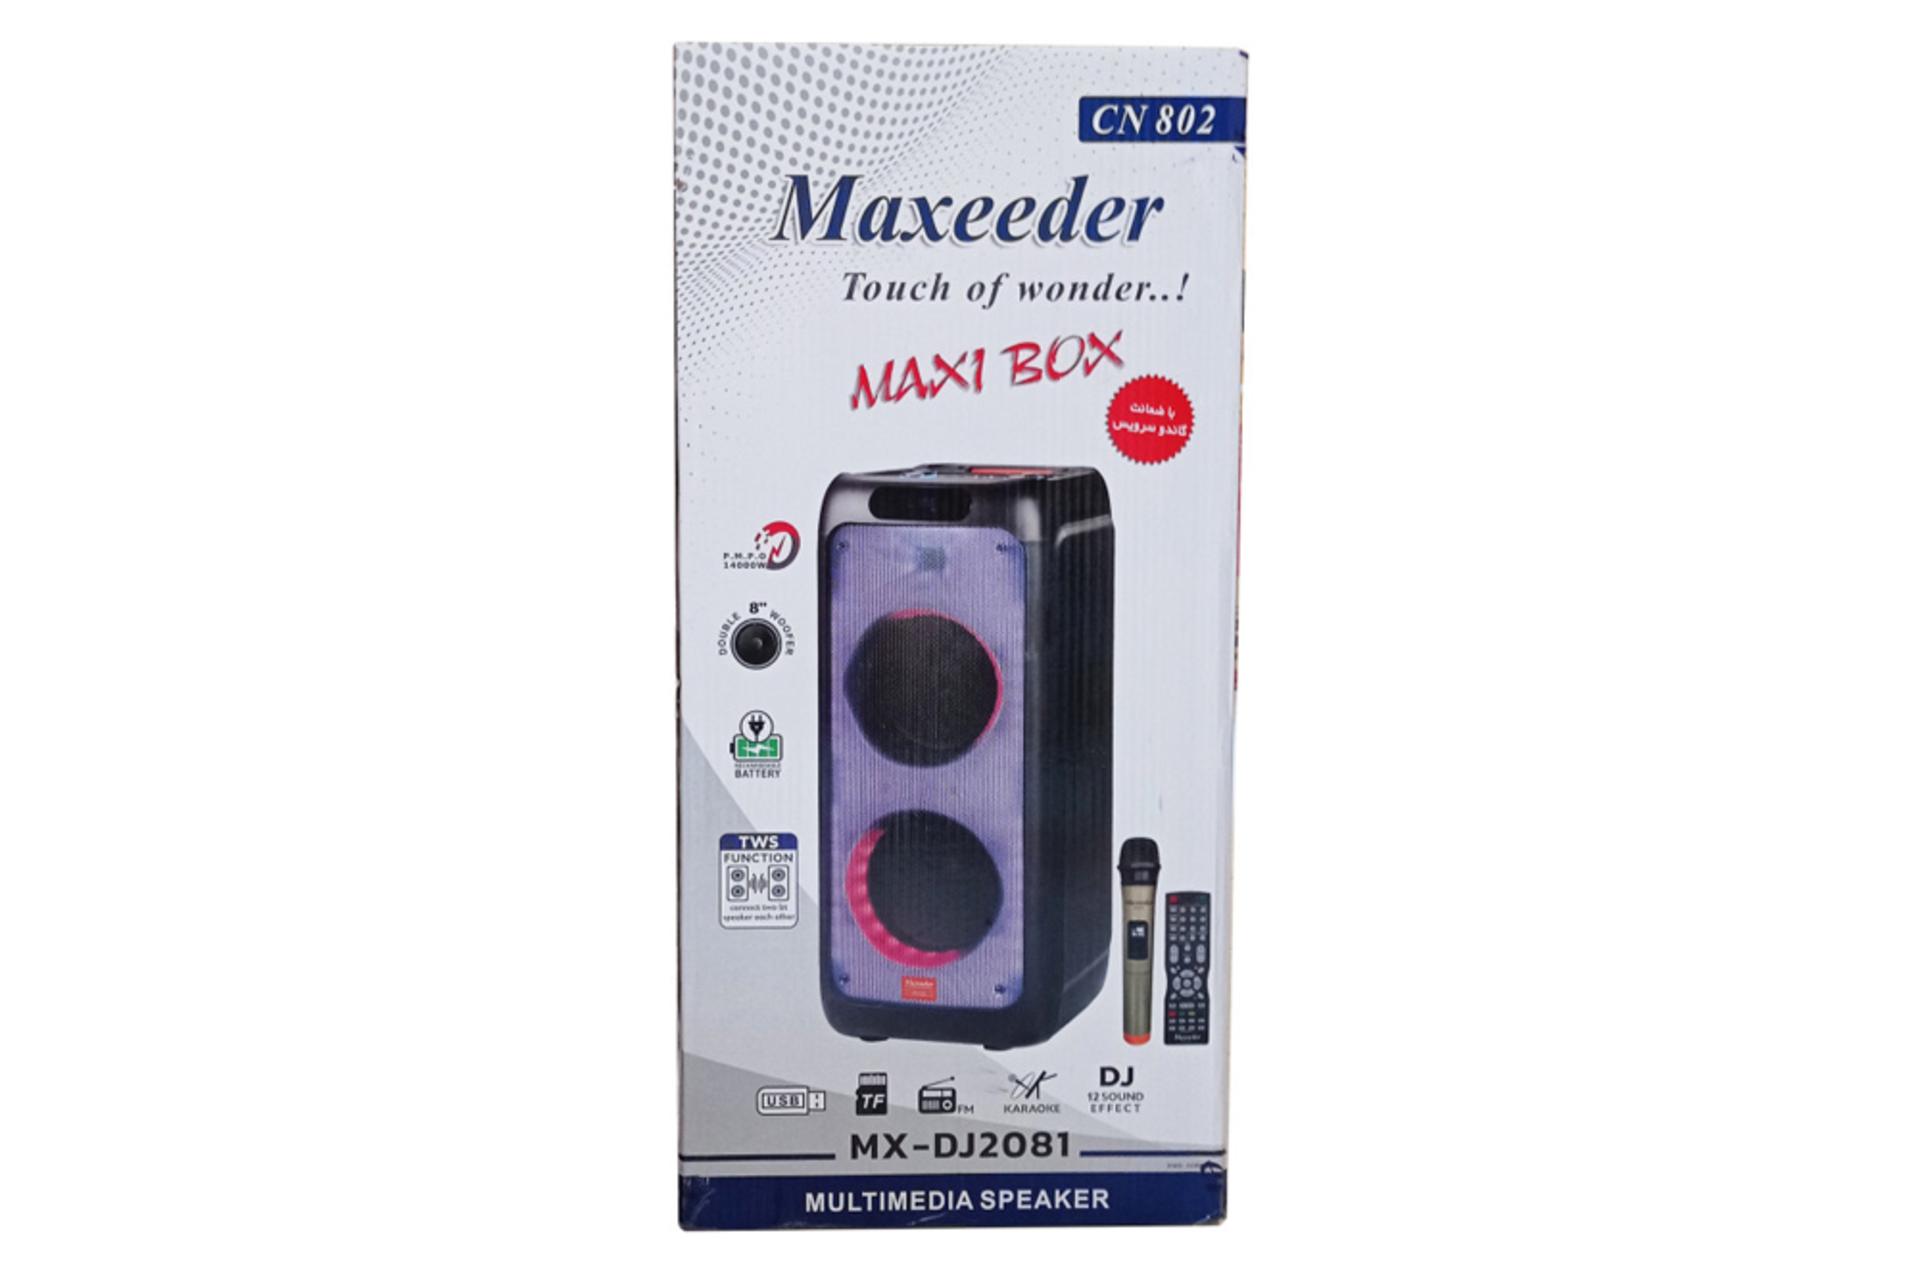 جعبه اسپیکر مکسیدر Maxeeder MX-DJ2081 CN802